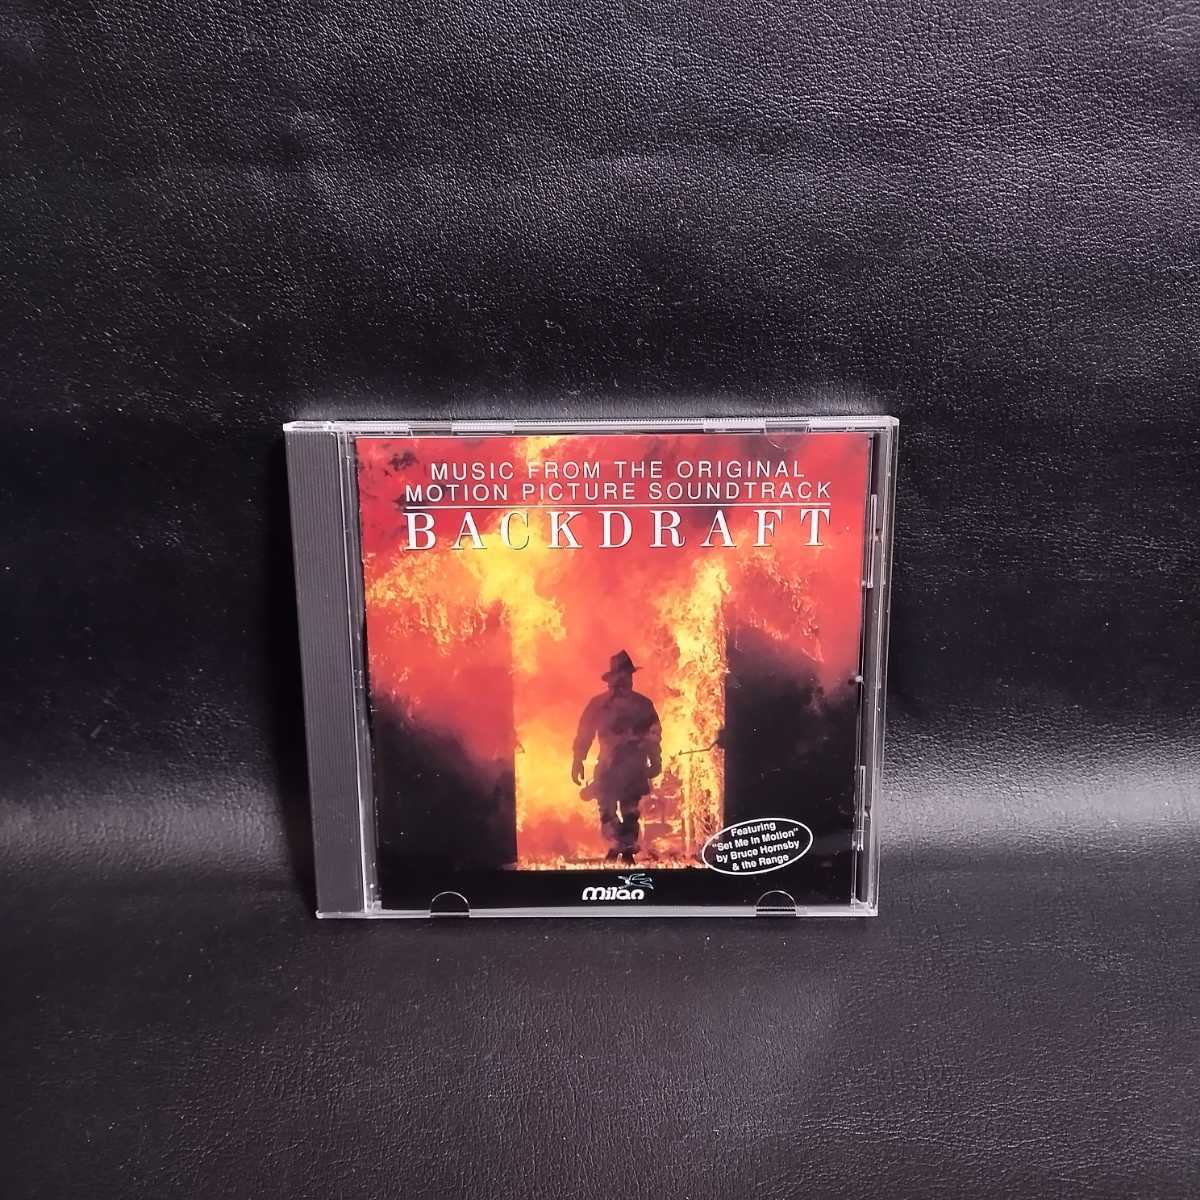 【BACKDRAFT】バックドラフト オリジナルサウンドトラック 音楽 ハンス・ジ サントラ 1999年 映画音楽 CD